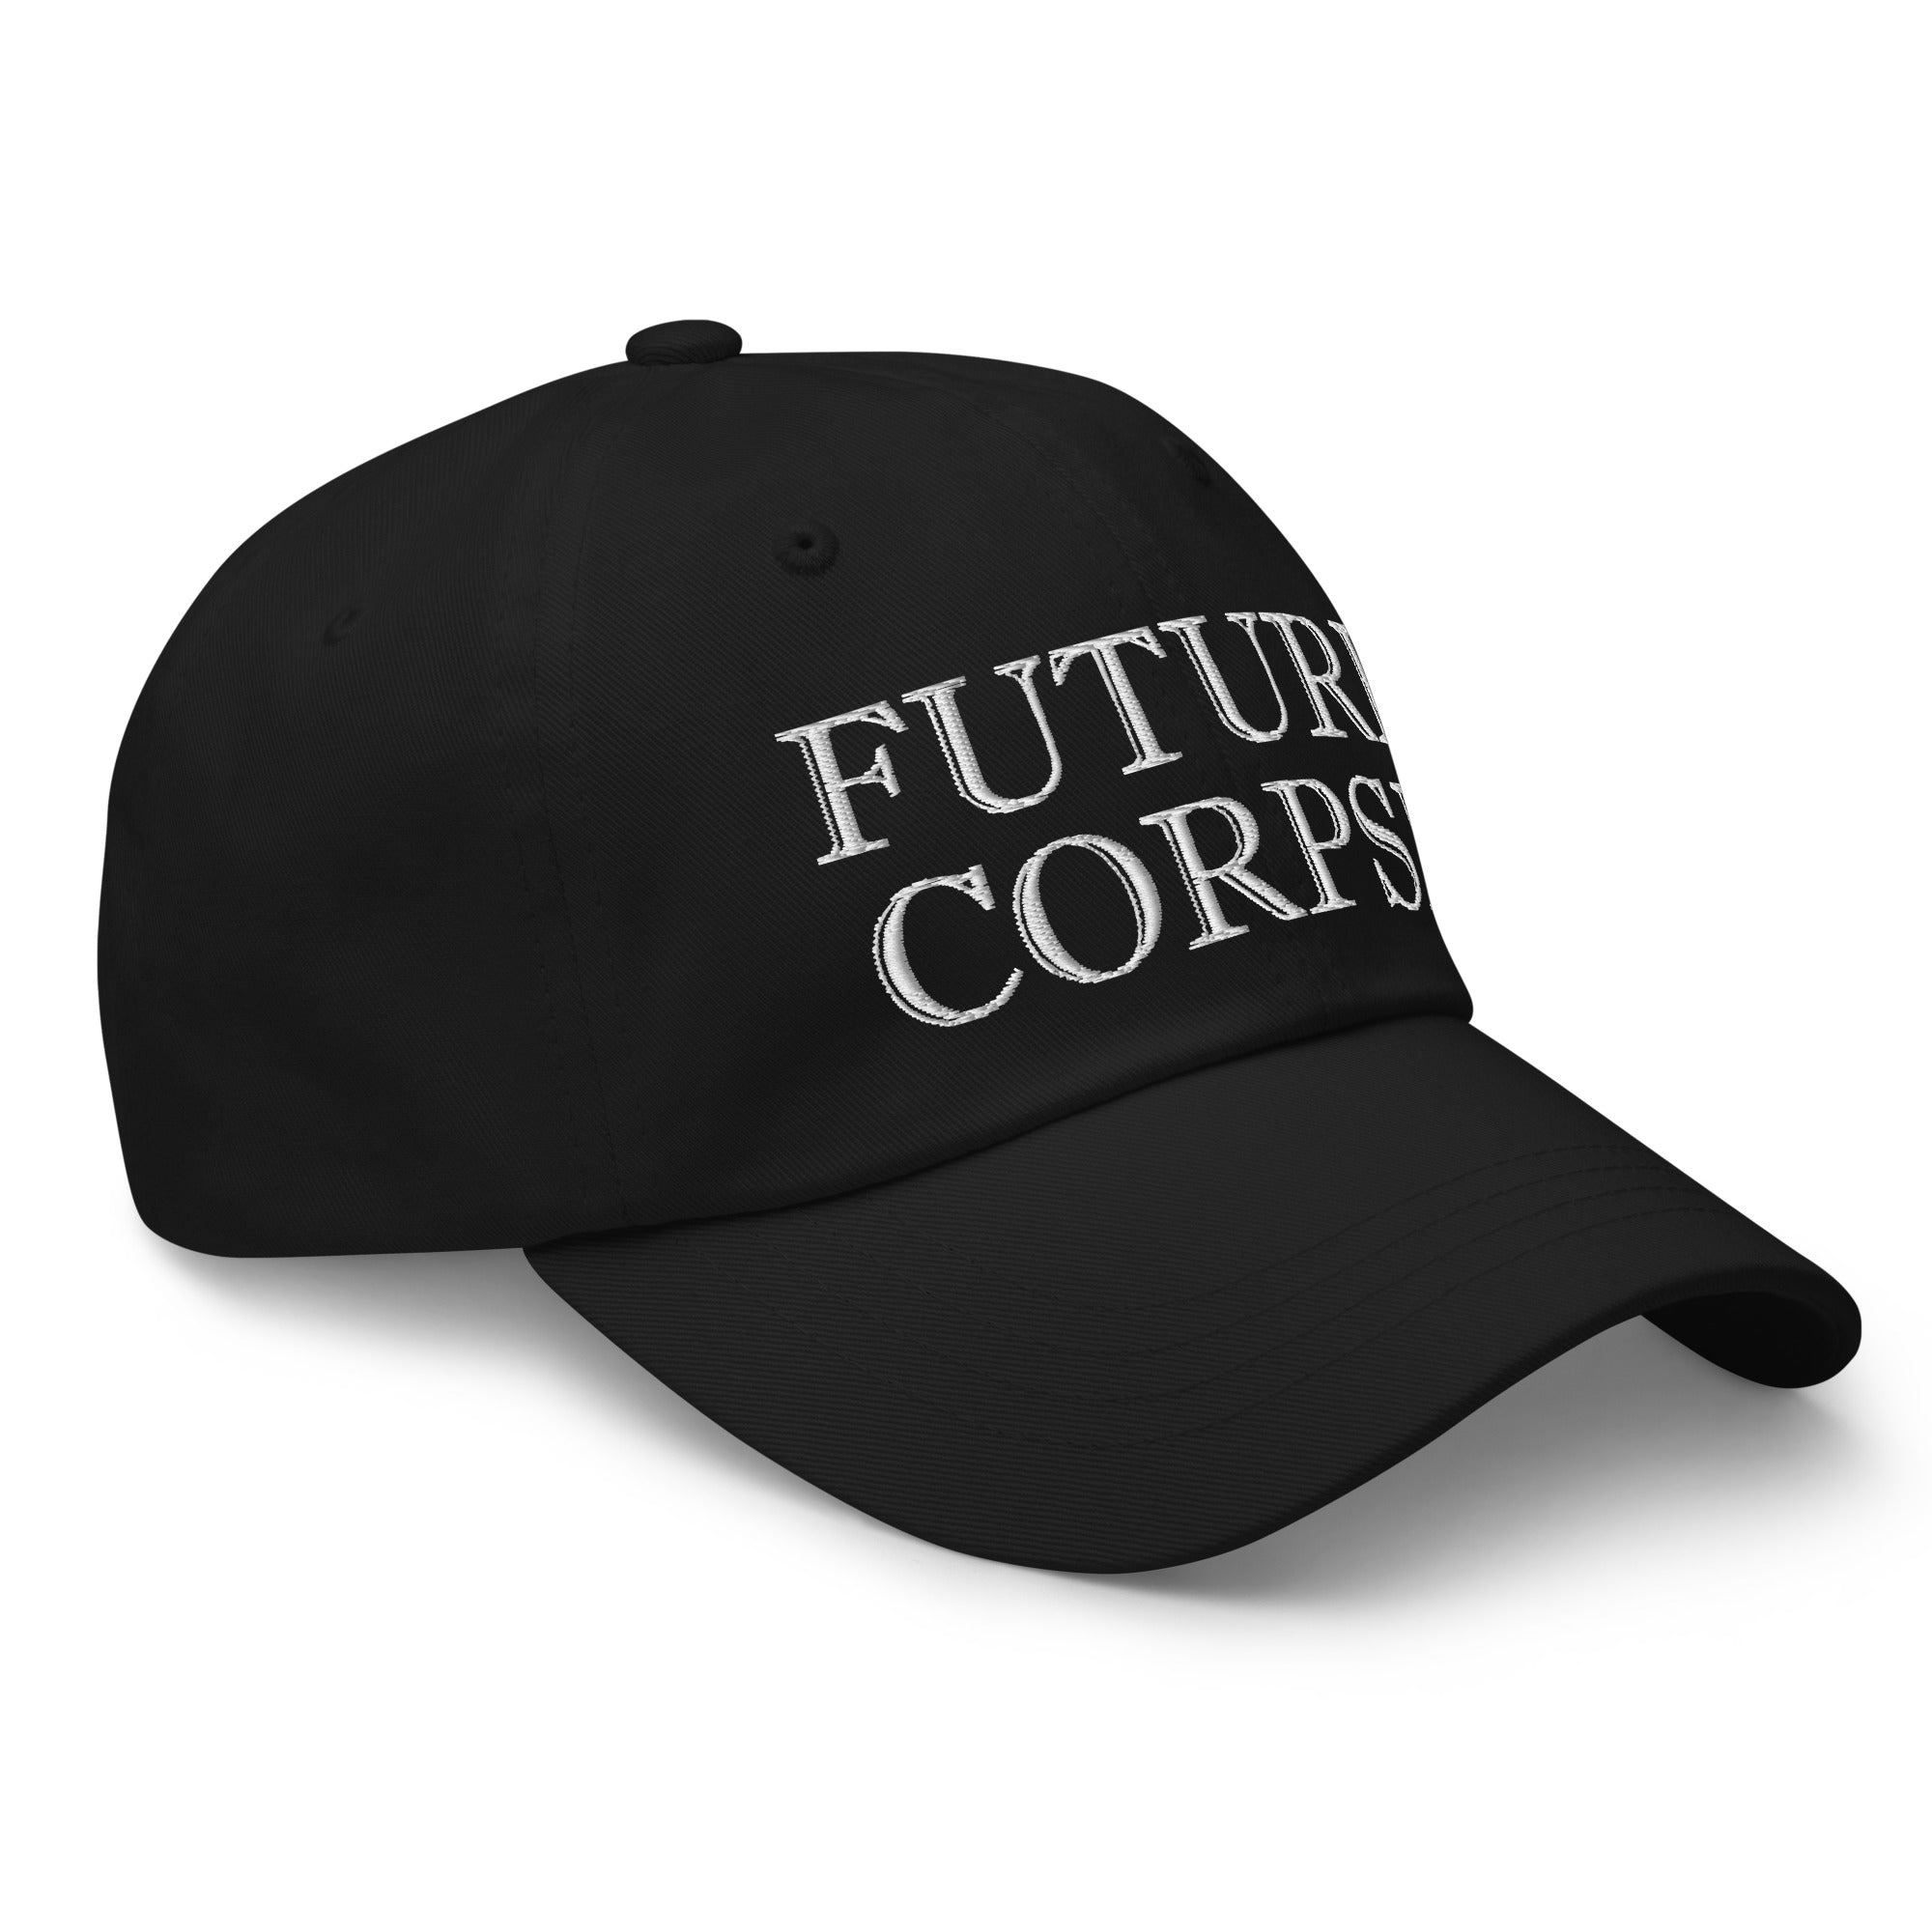 Future Corpse Embroidered Baseball Cap Original Goth Design Dad hat - Edge of Life Designs